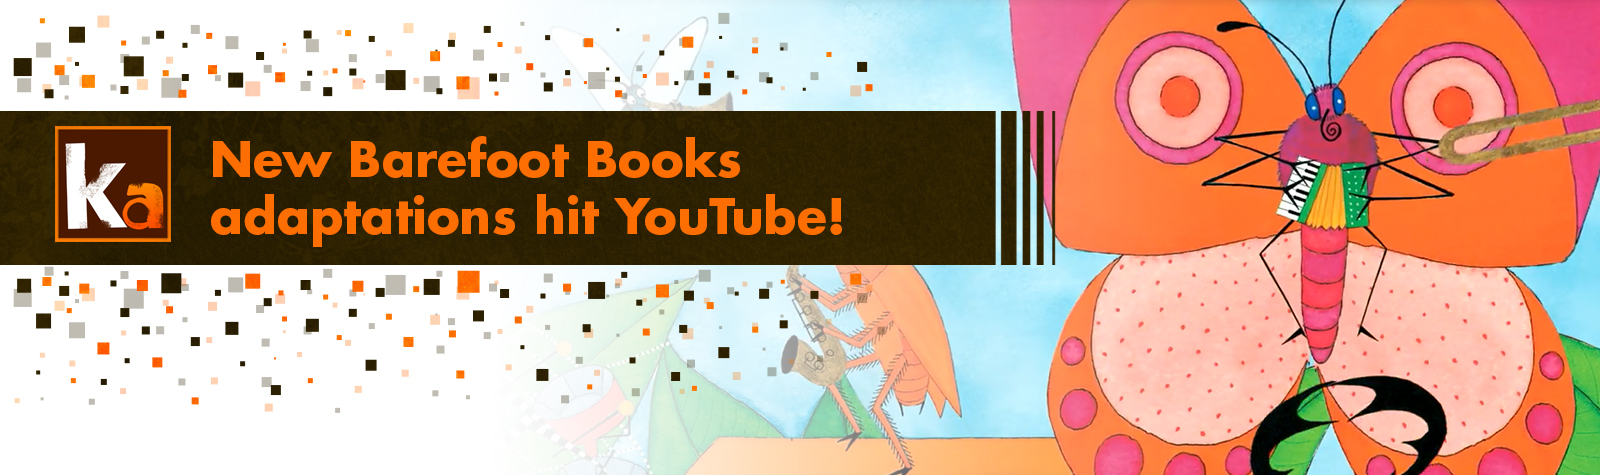 New Barefoot Books adaptations hit YouTube!